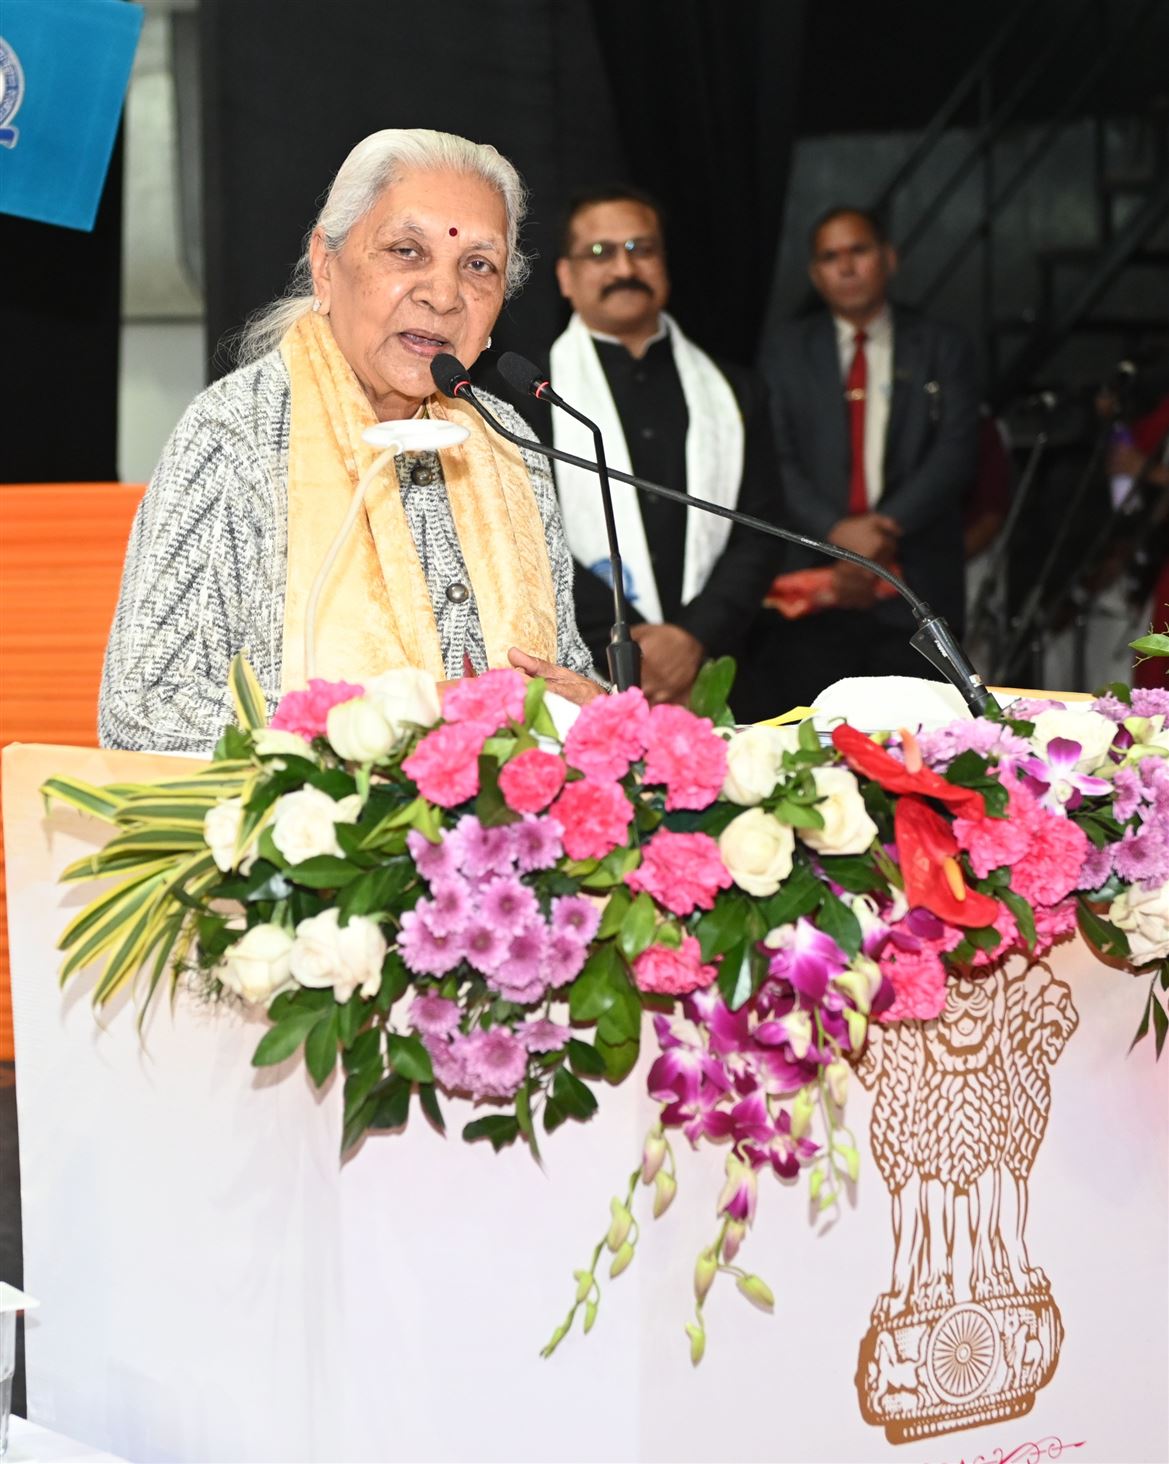 The first convocation ceremony of Dr. Ram Manohar Lohia Institute of Medical Sciences, Lucknow concluded under the chairmanship of the Governor./राज्यपाल की अध्यक्षता में डॉ0 राम मनोहर लोहिया आयुर्विज्ञान संस्थान, लखनऊ का प्रथम दीक्षान्त समारोह सम्पन्न